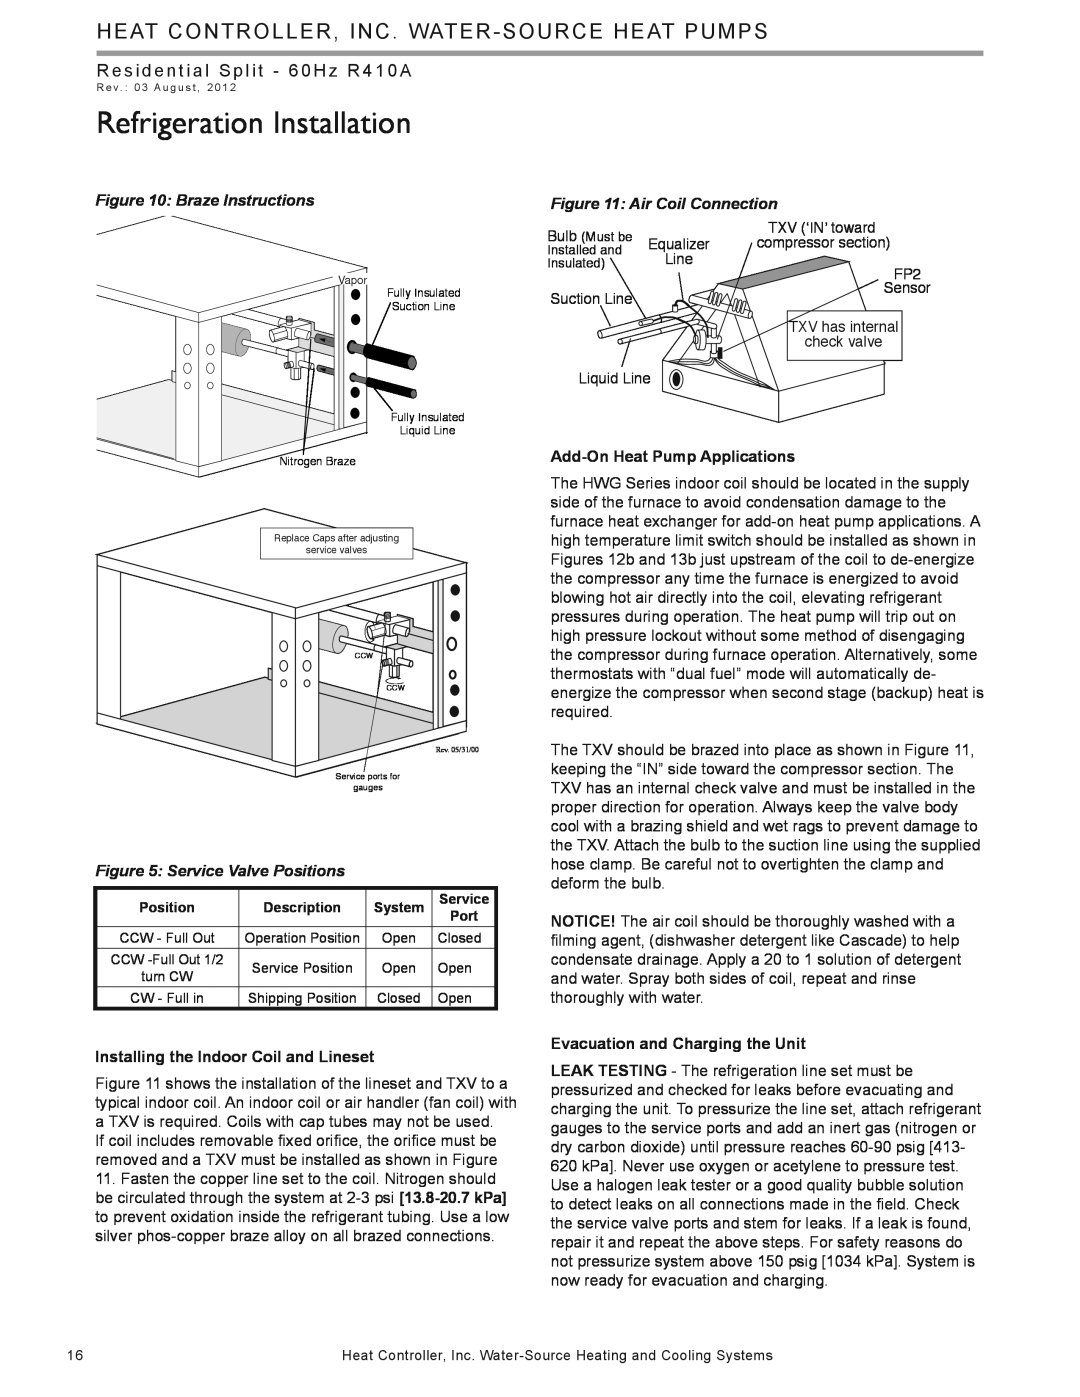 Heat Controller HTS SERIES manual Refrigeration Installation, Heat Controller, Inc. Water-Sourceheat Pumps 